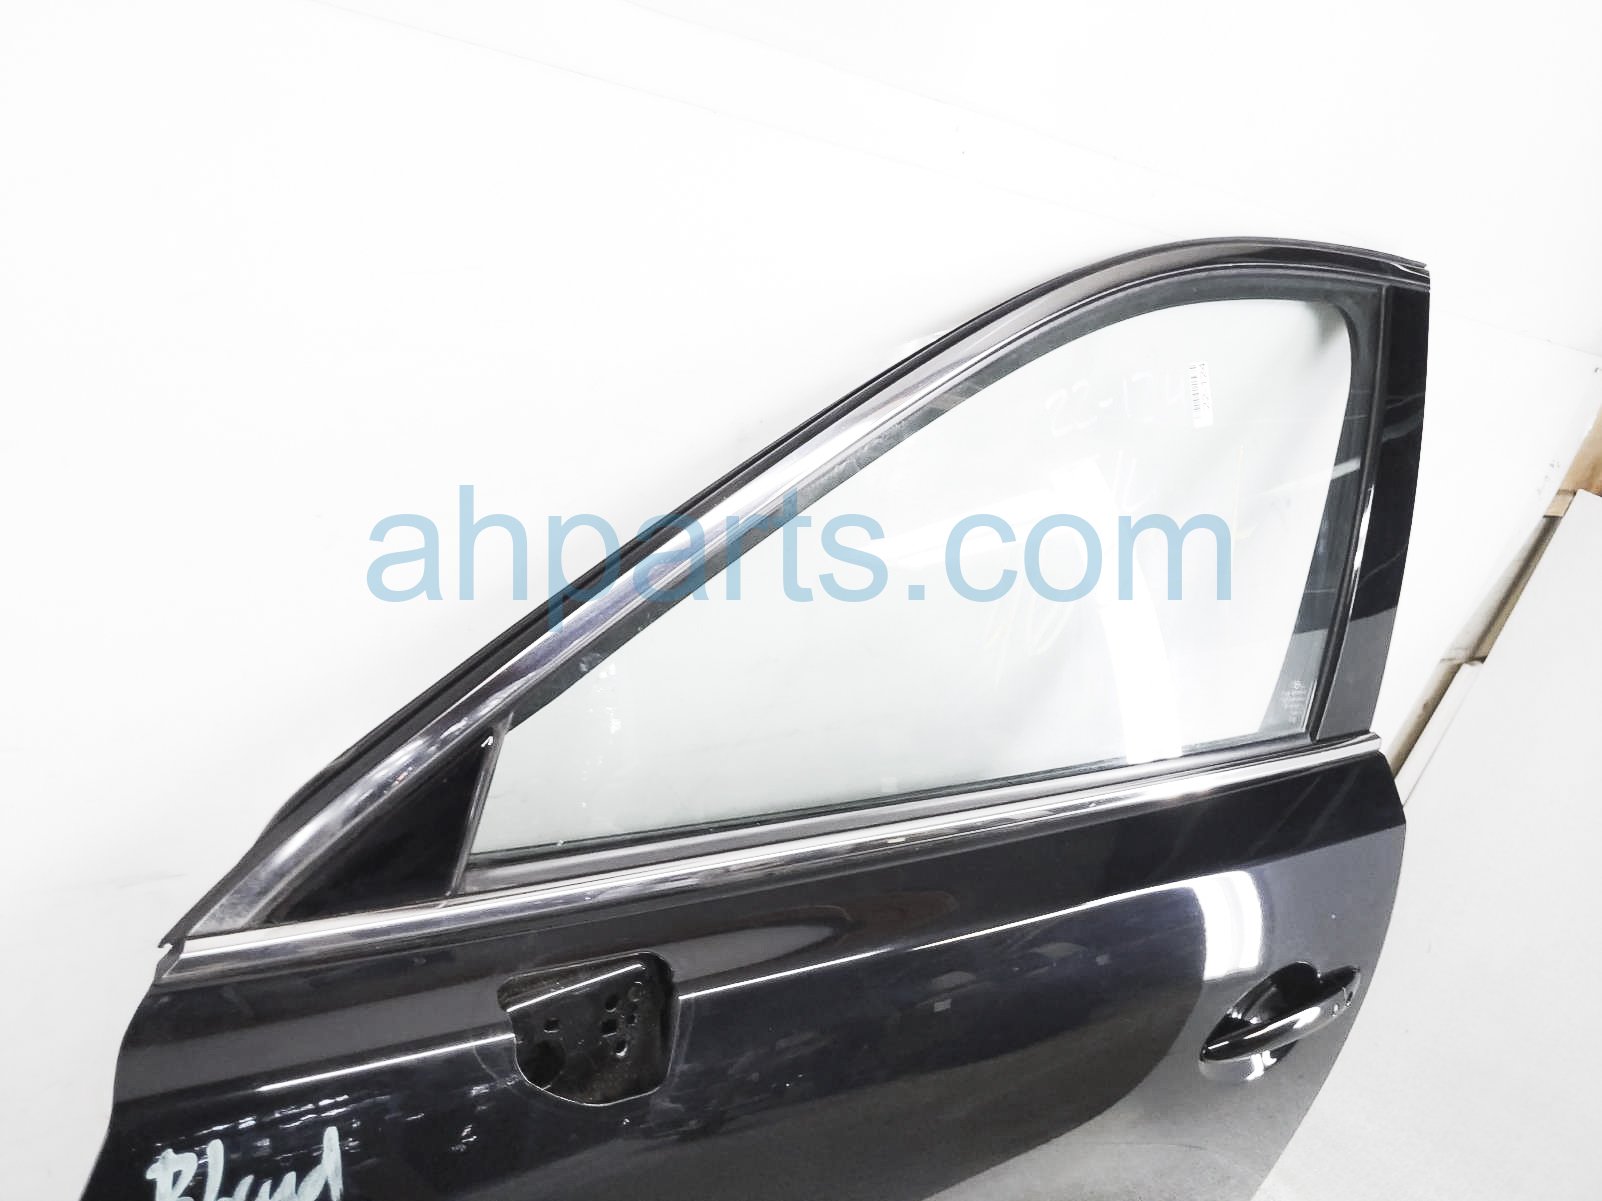 2019 Mazda CX-9 Front Driver Door - Black - No Mirror/trim TKY0-59-02XD,